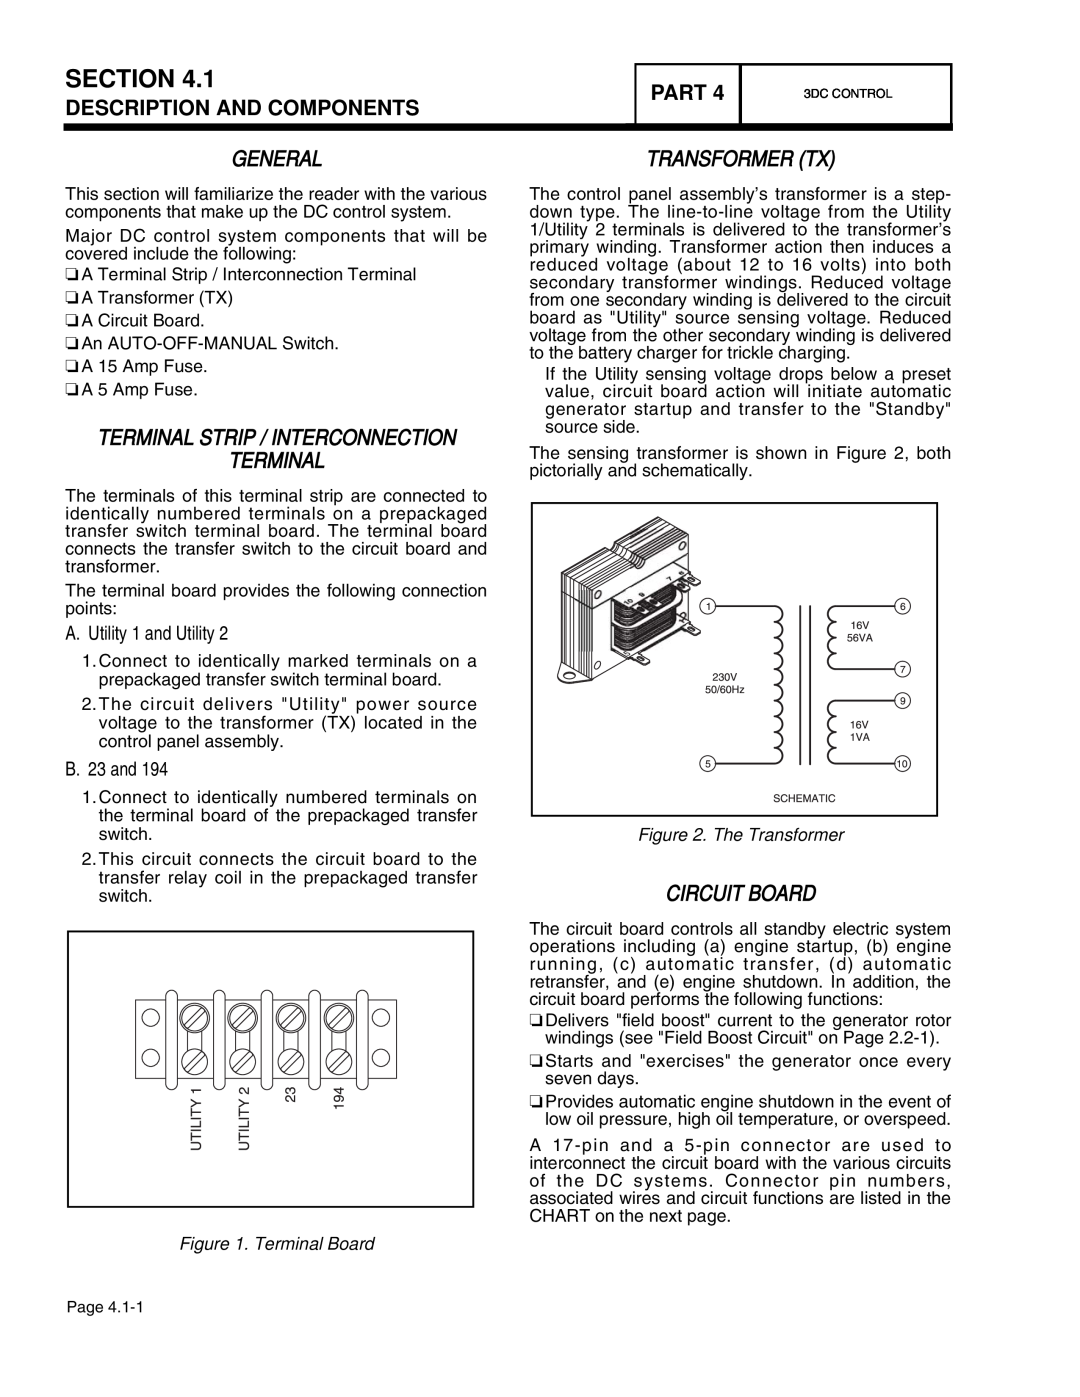 Guardian Technologies 4390 Description And Components, Terminal Strip / Interconnection Terminal, Transformer Tx, Section 